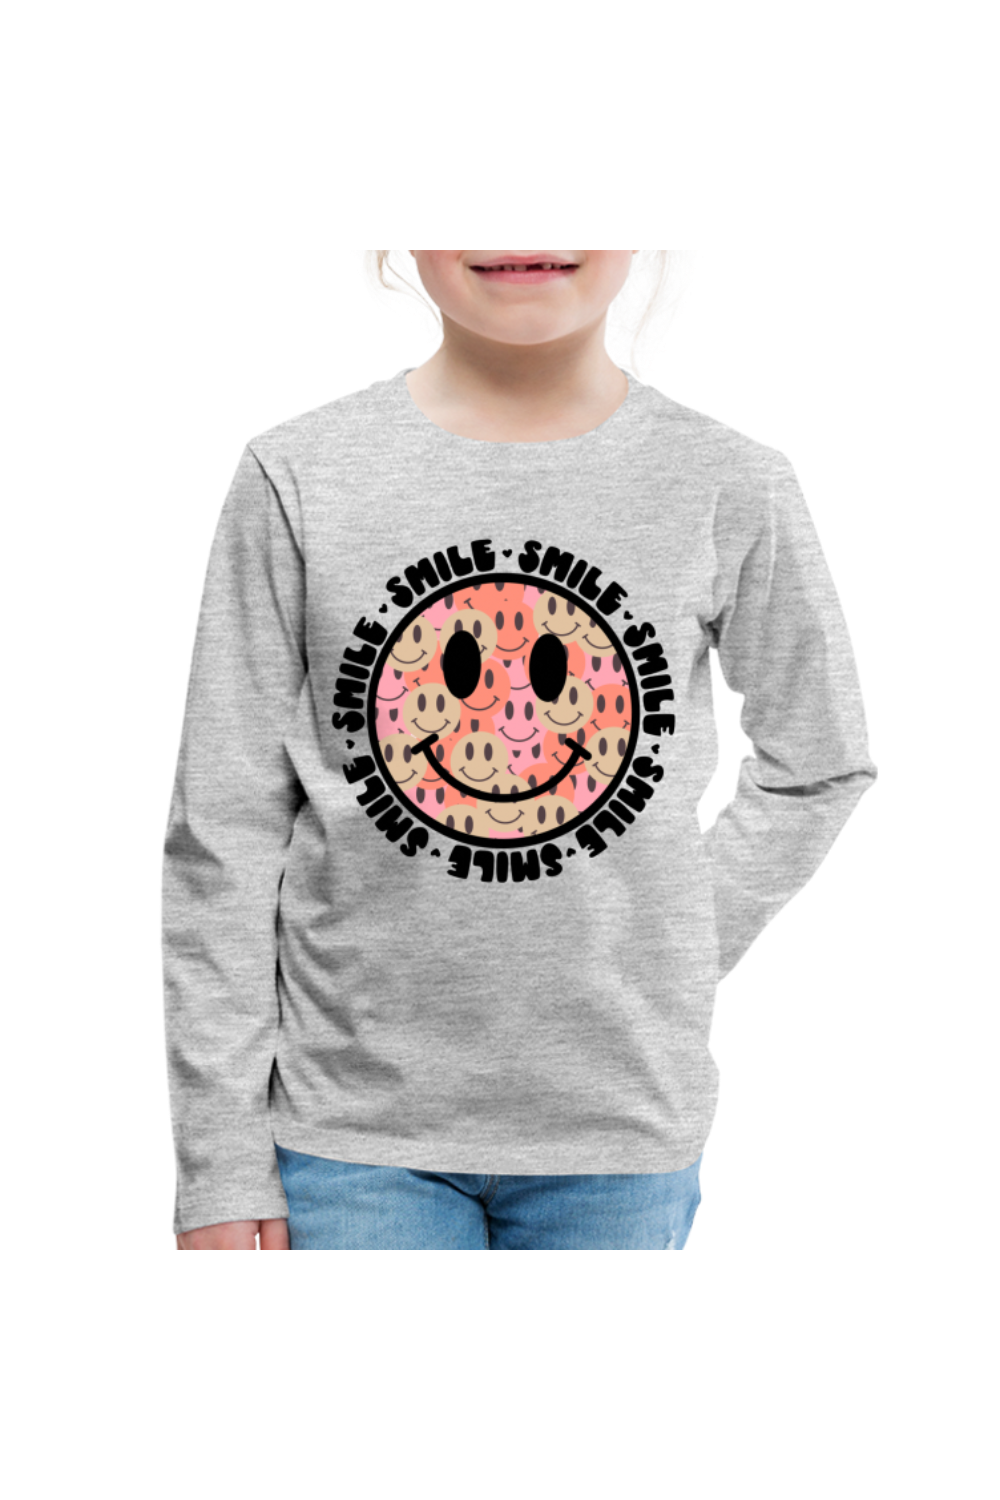 Girls Smile Long Sleeve T-Shirt - heather gray - NicholesGifts.online